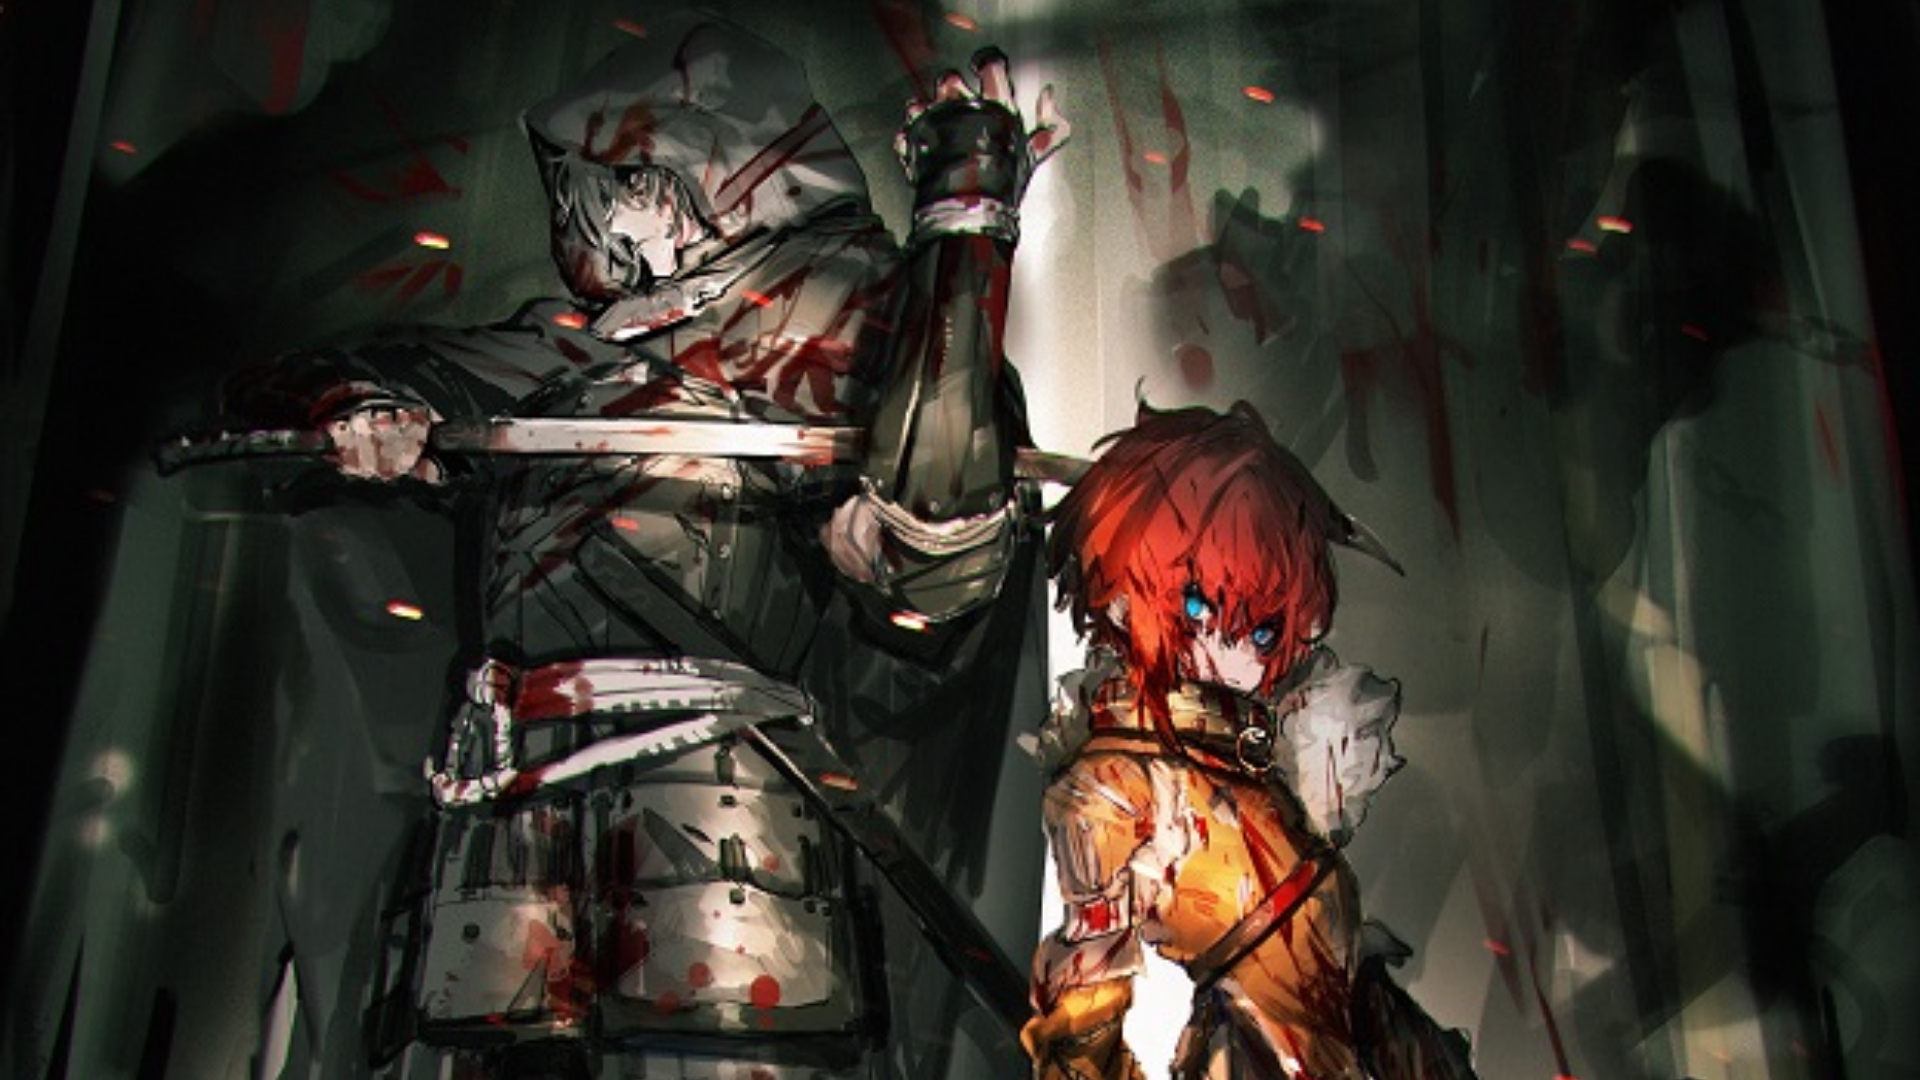 Goblin Slayer Author and Overlord Illustrator Dark Fantasy Novel Reveals  Title, Cover, Release Date - Anime Corner